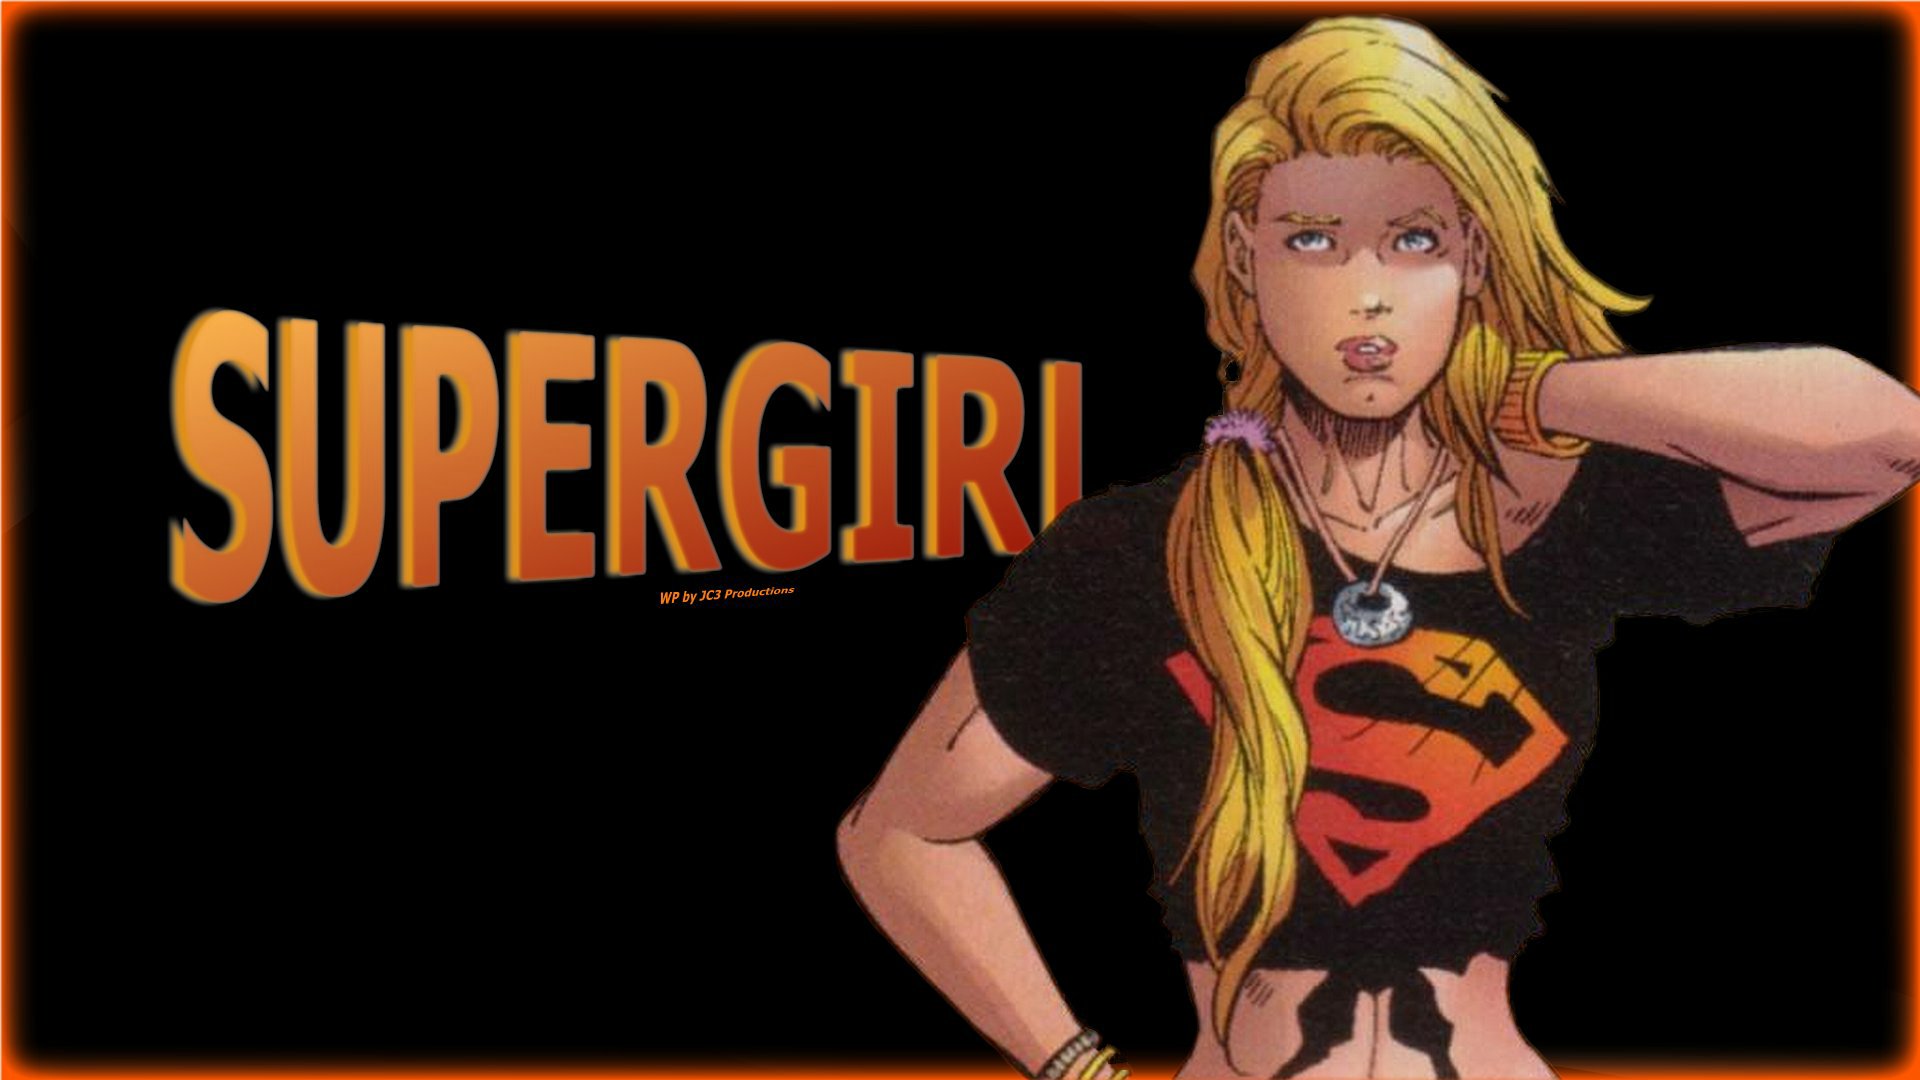 Supergirl Wallpaper - Teenager 2